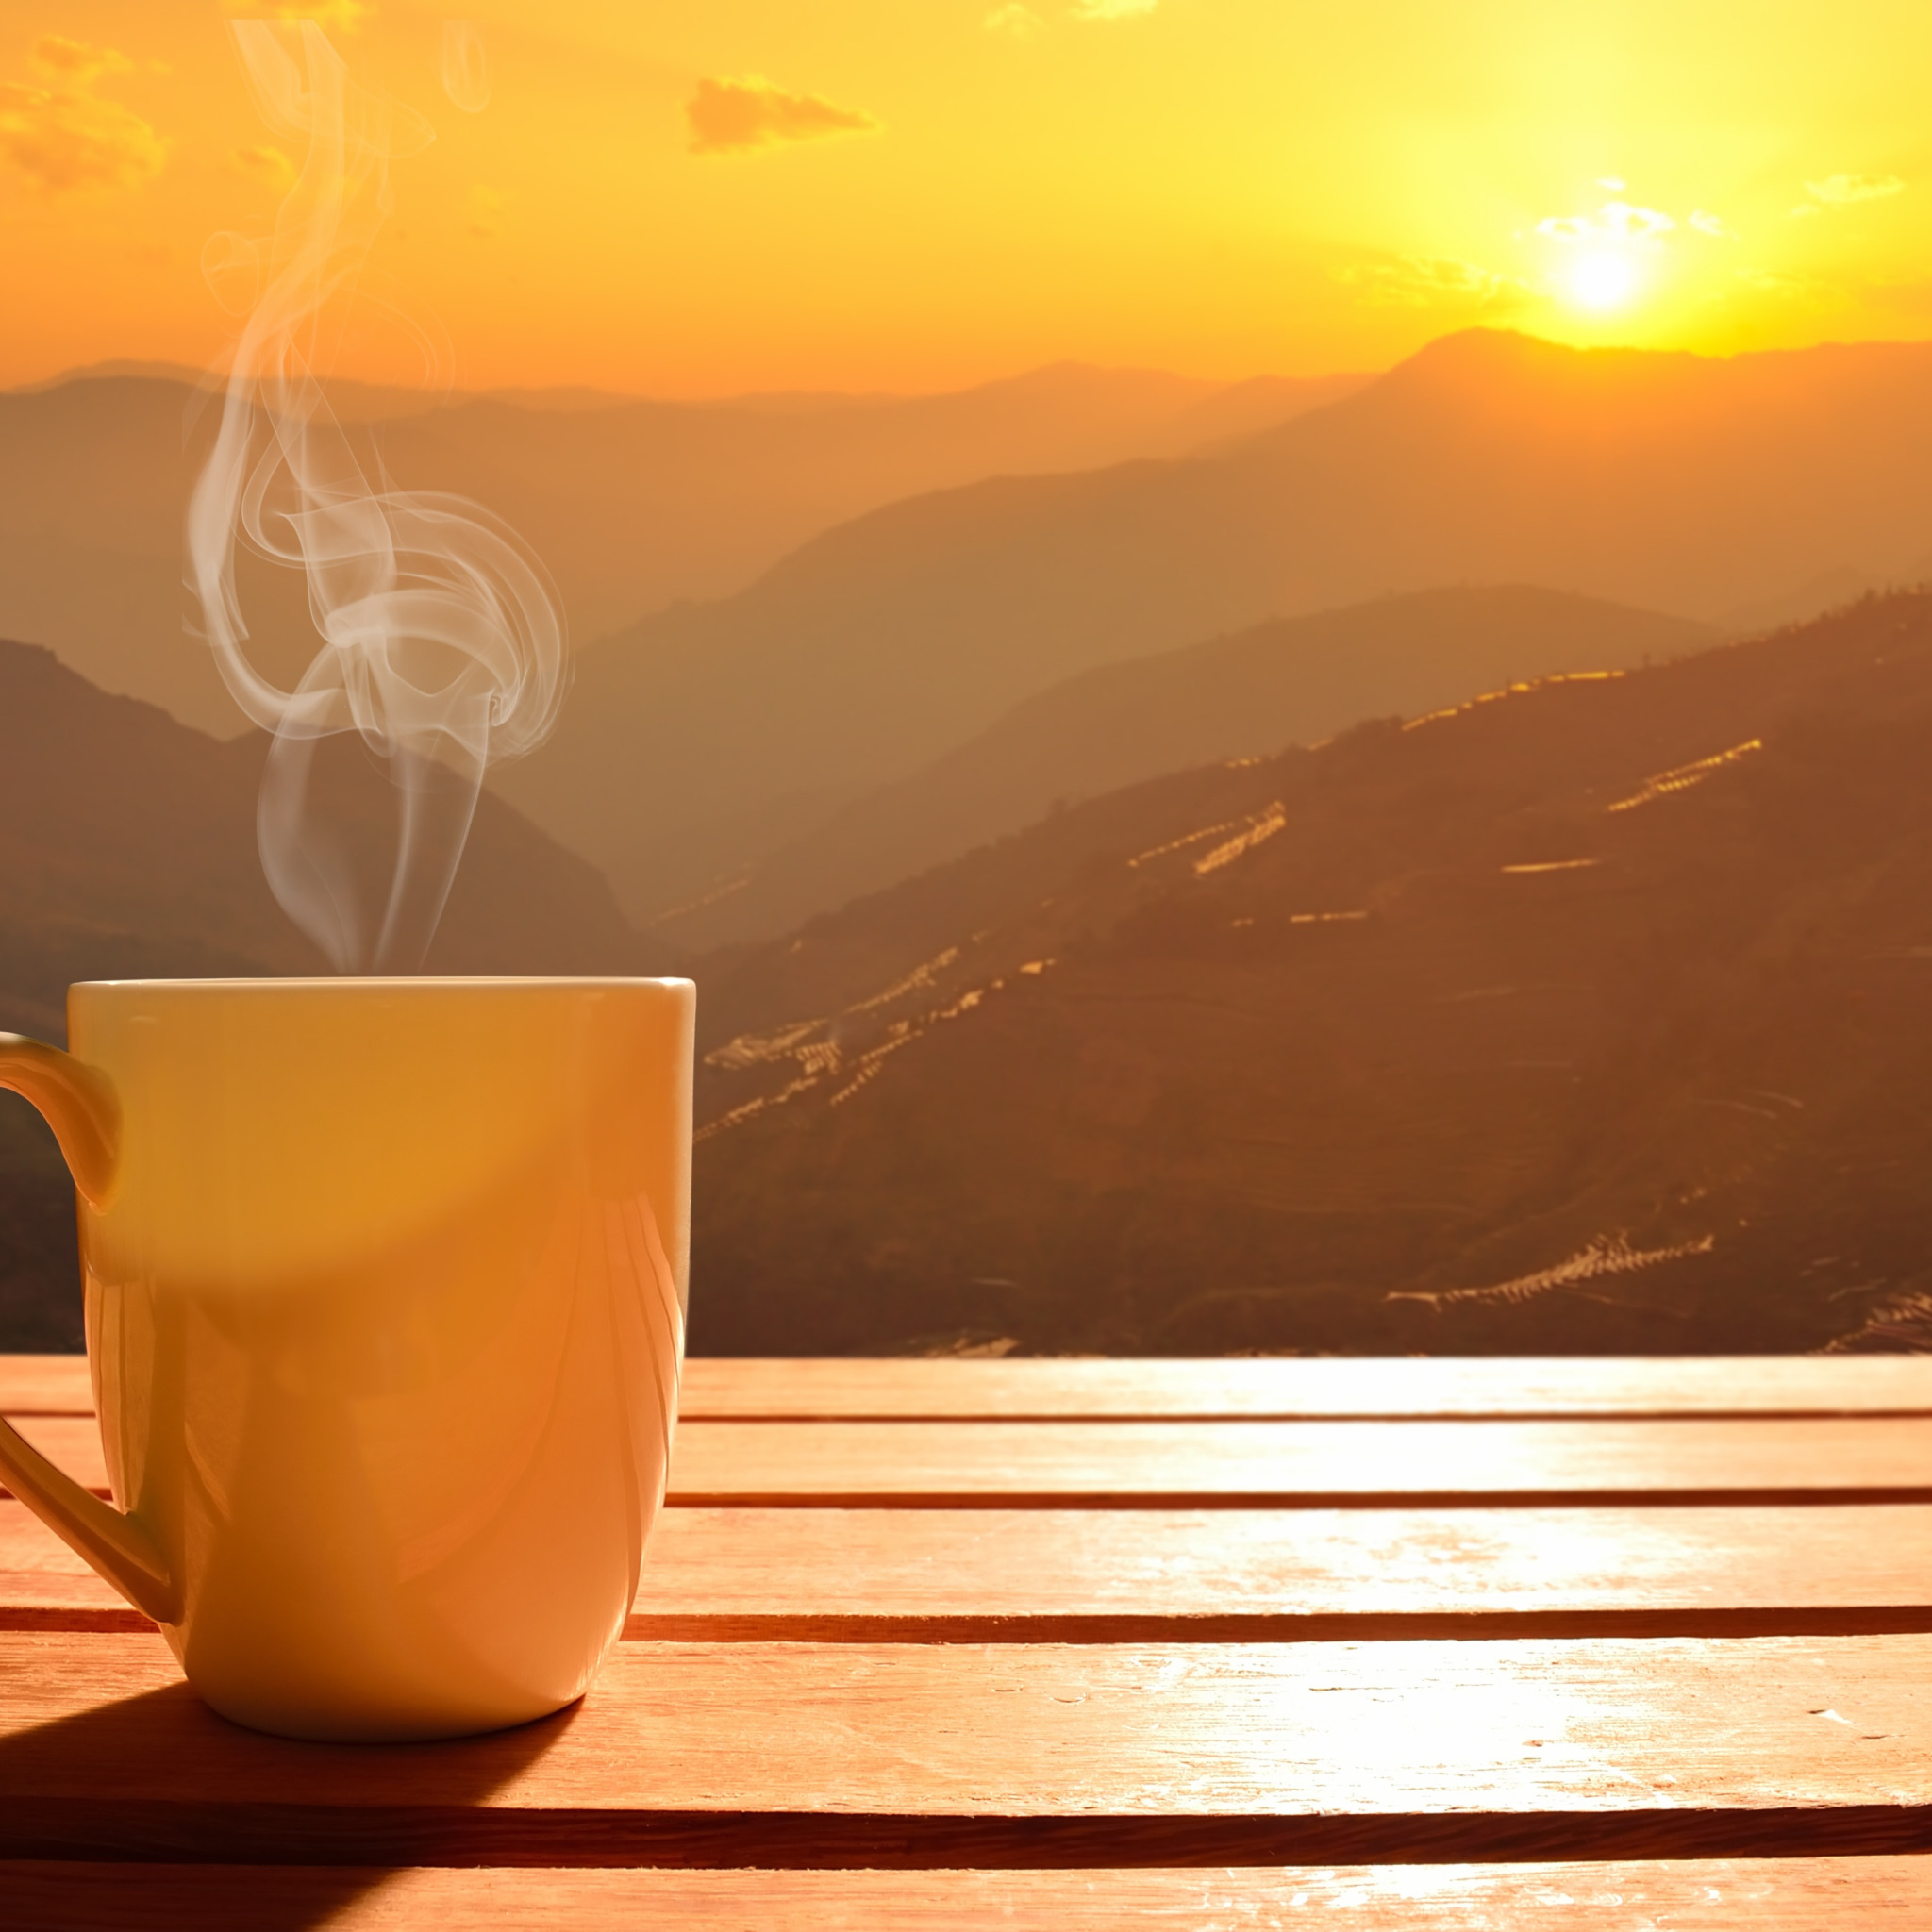 I have coffee in the morning. Кофе на Восходе солнца. Солнечное утро и кофе. Утреннее настроение. Кофе на рассвете.